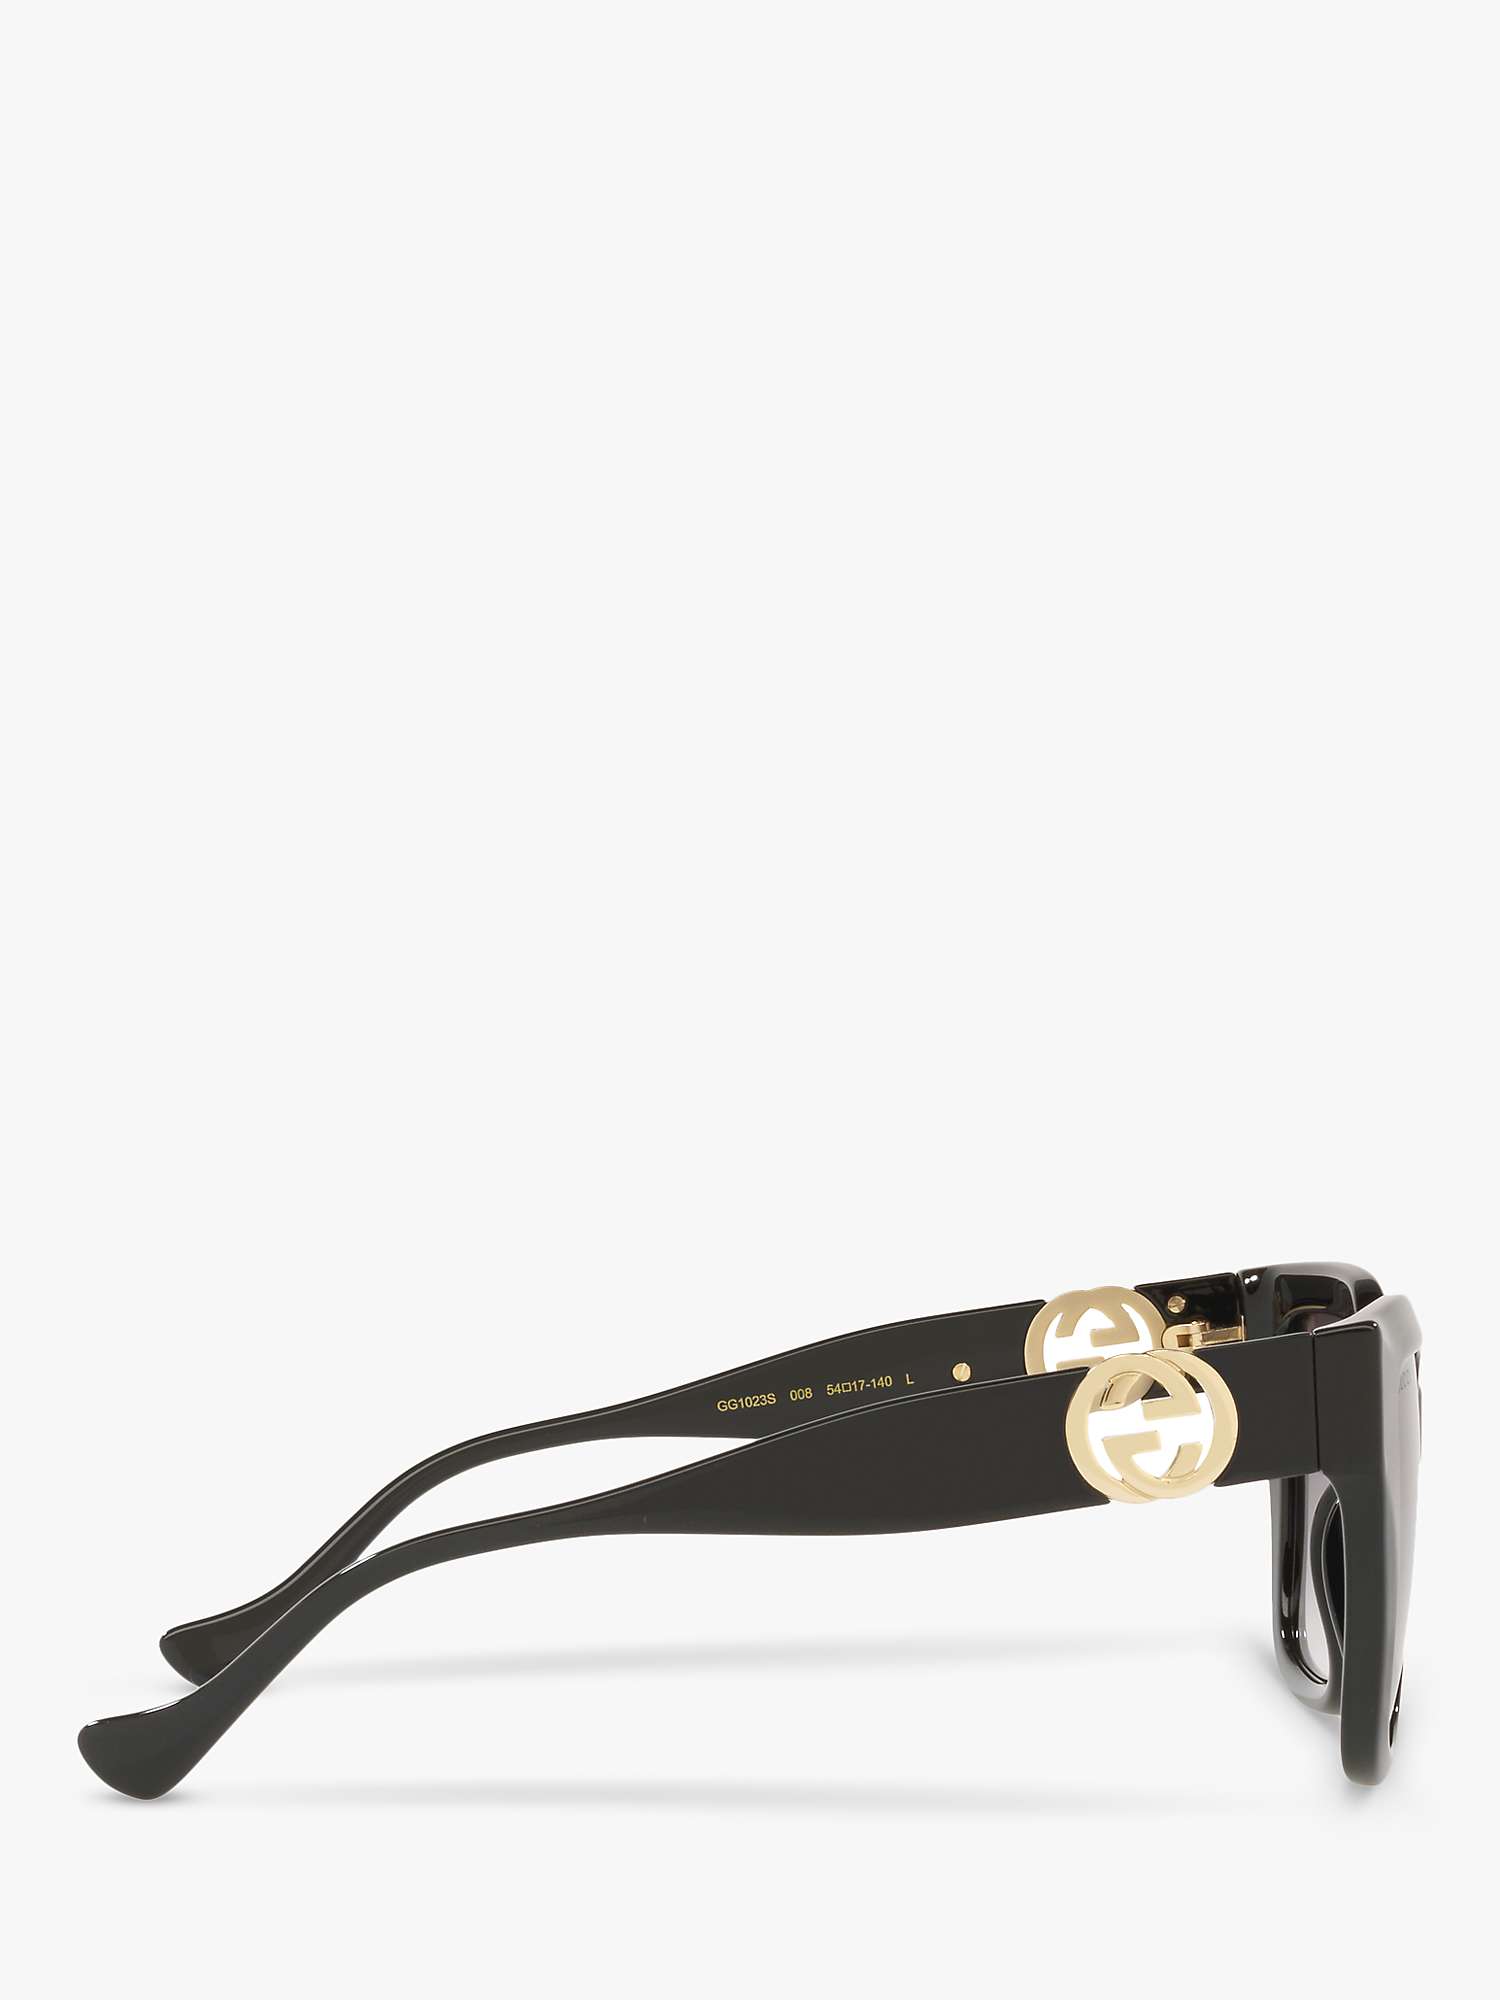 Buy Gucci GG1023S Women's D-Frame Sunglasses, Black/Grey Gradient Online at johnlewis.com